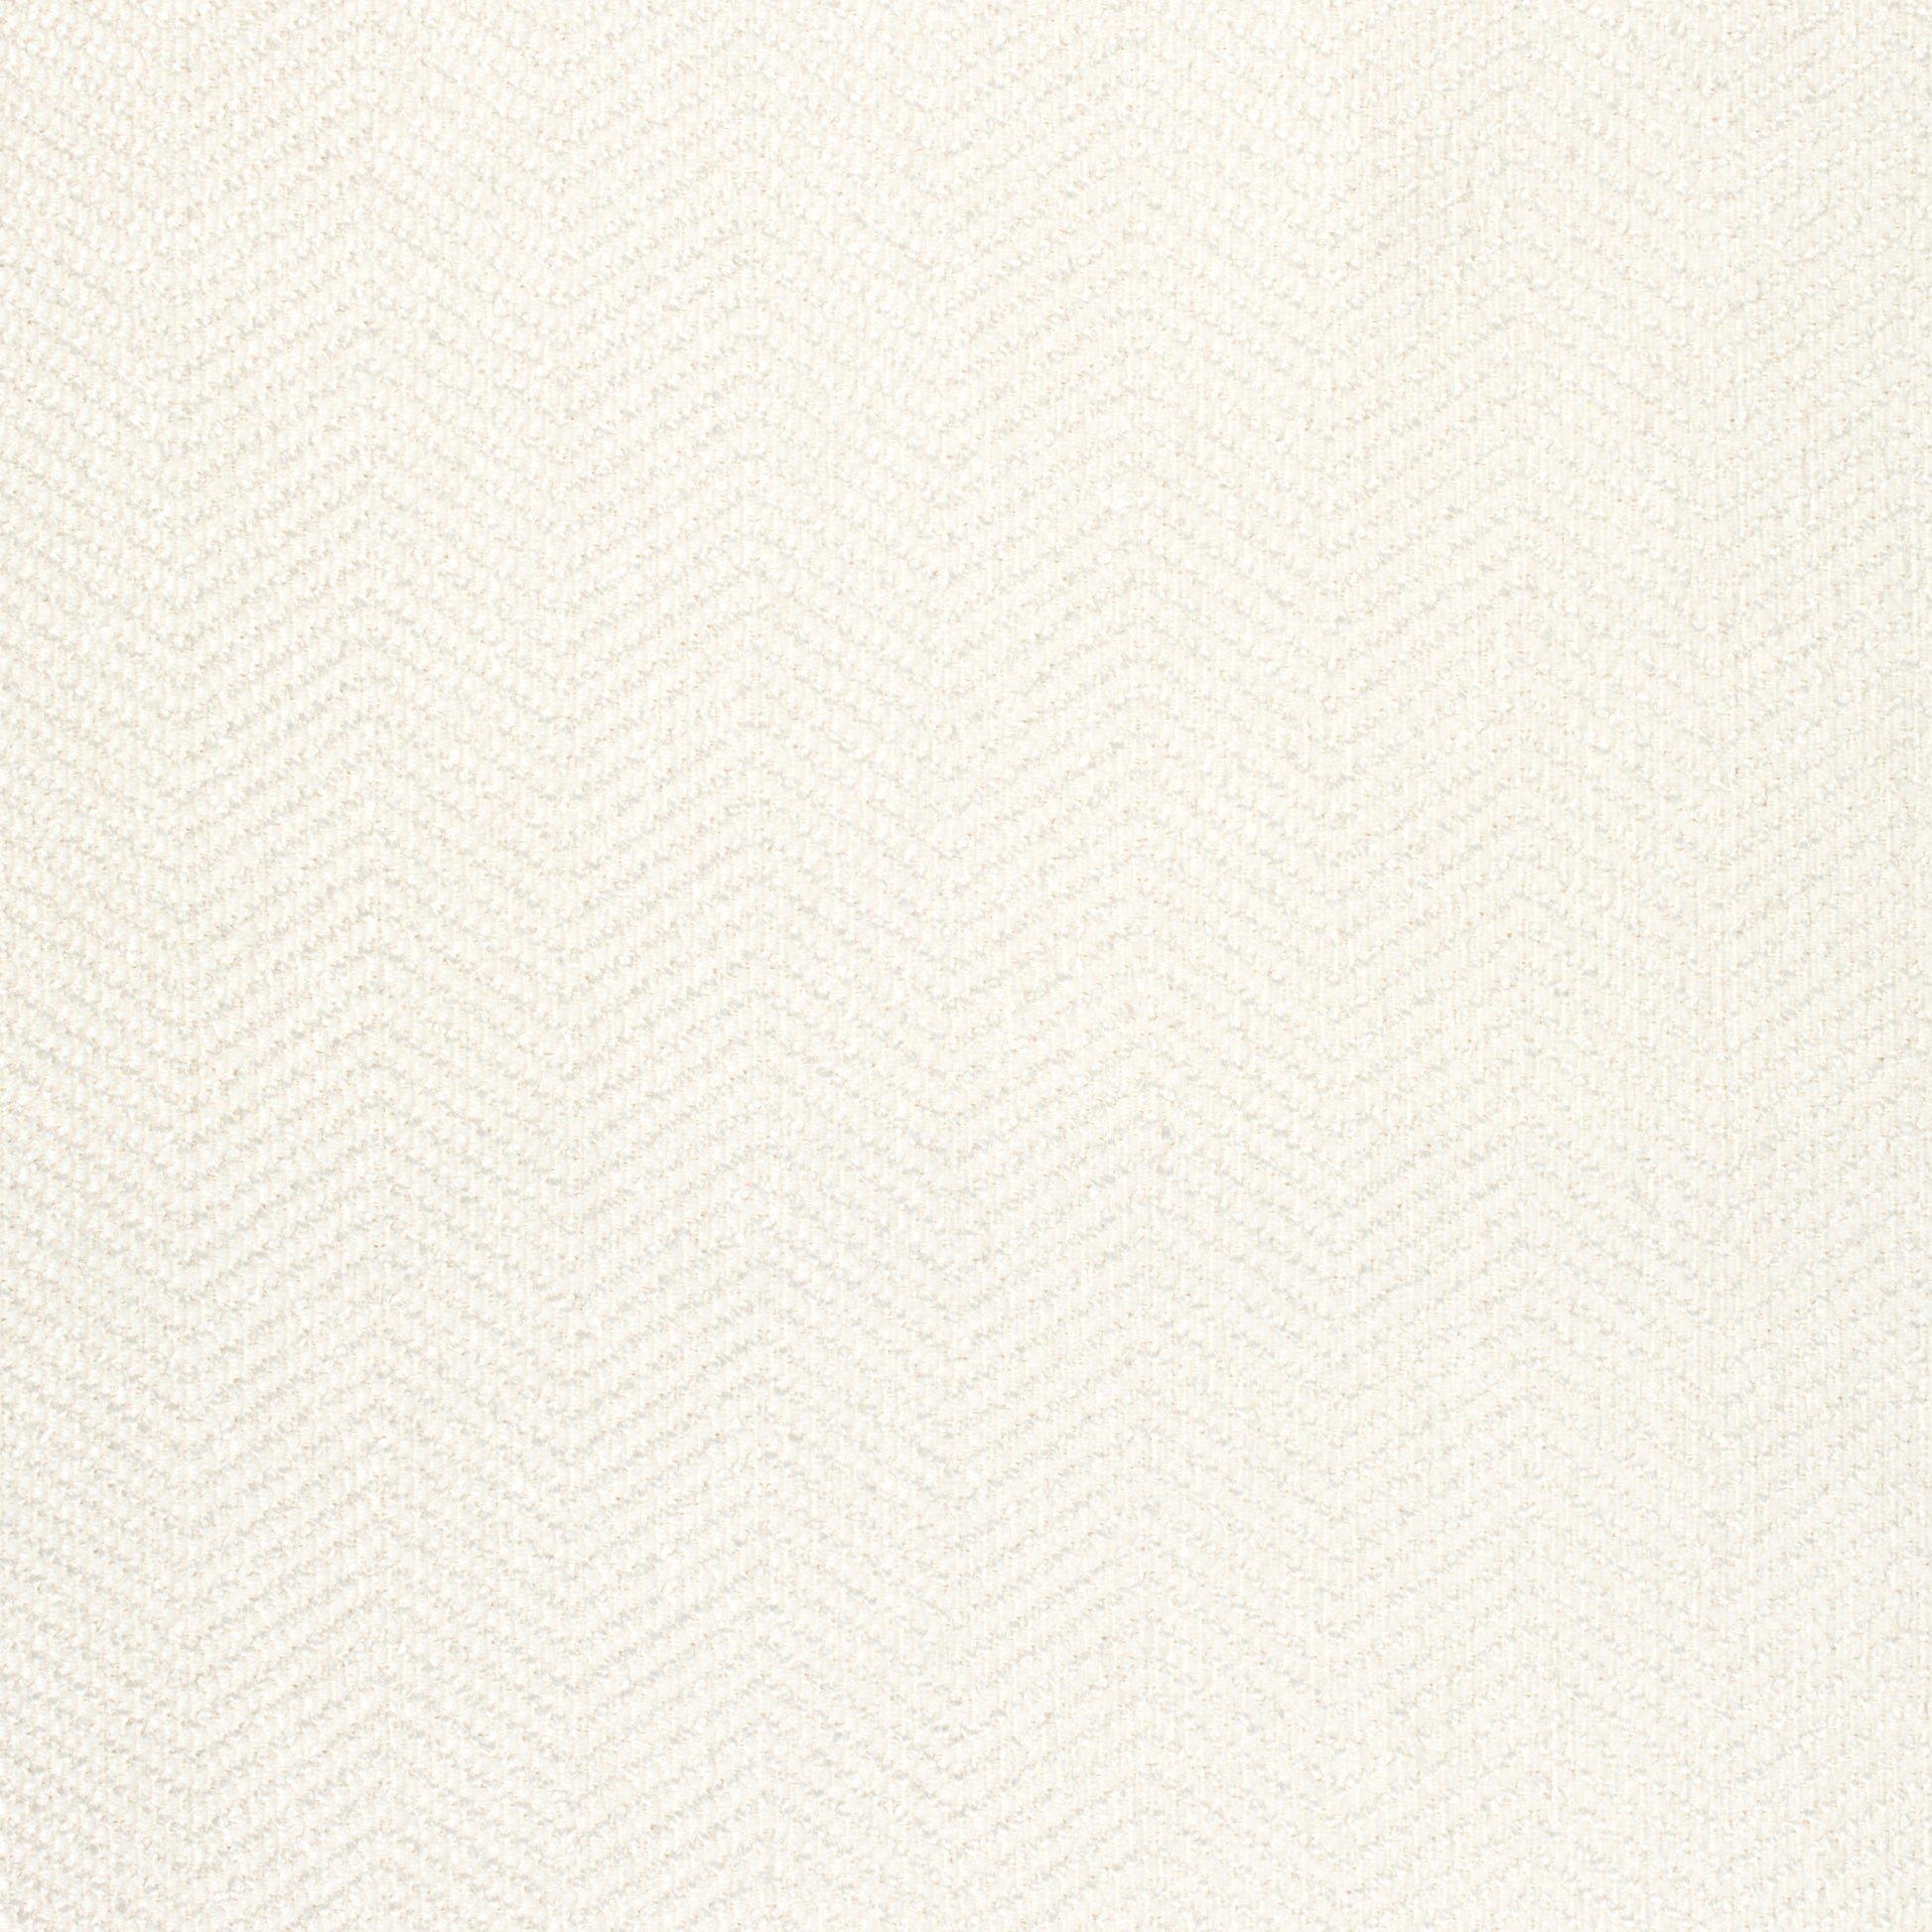 Purchase Thibaut Fabric Item# W80620 pattern name Dalton Herringbone color Snow White